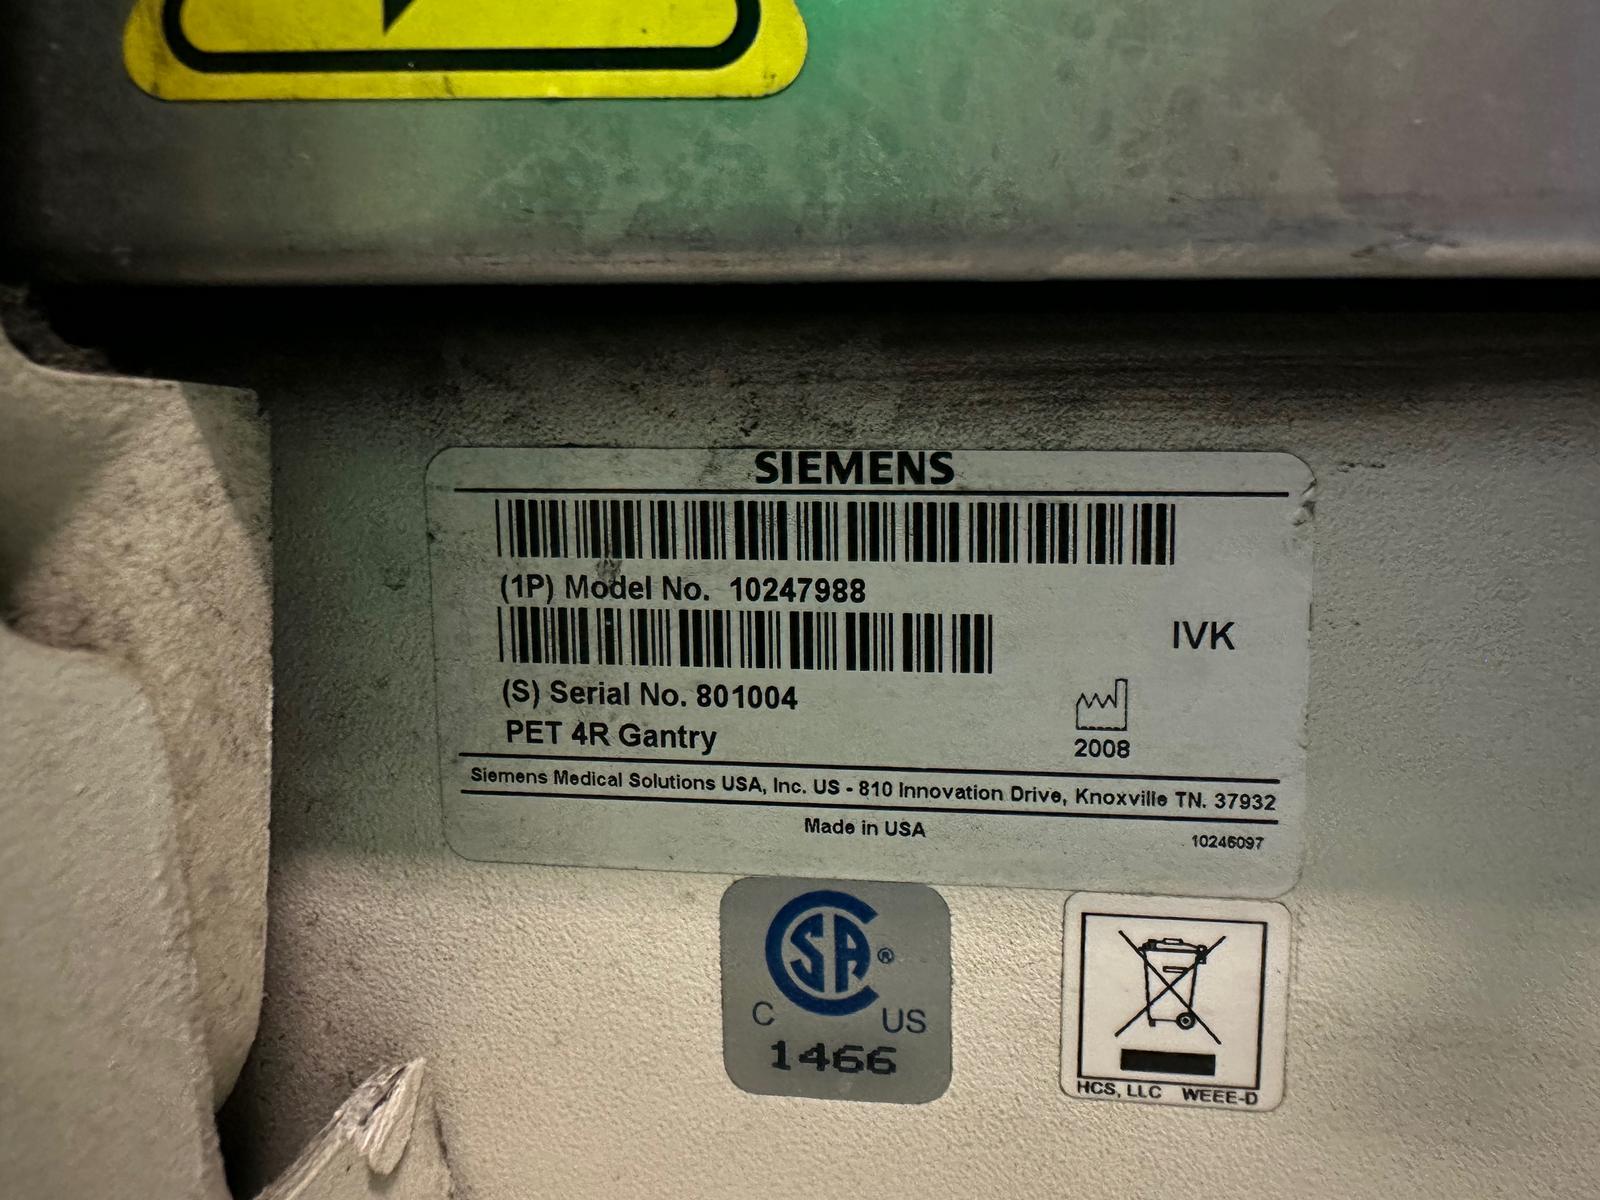 Siemens Biograph 6 - 2008